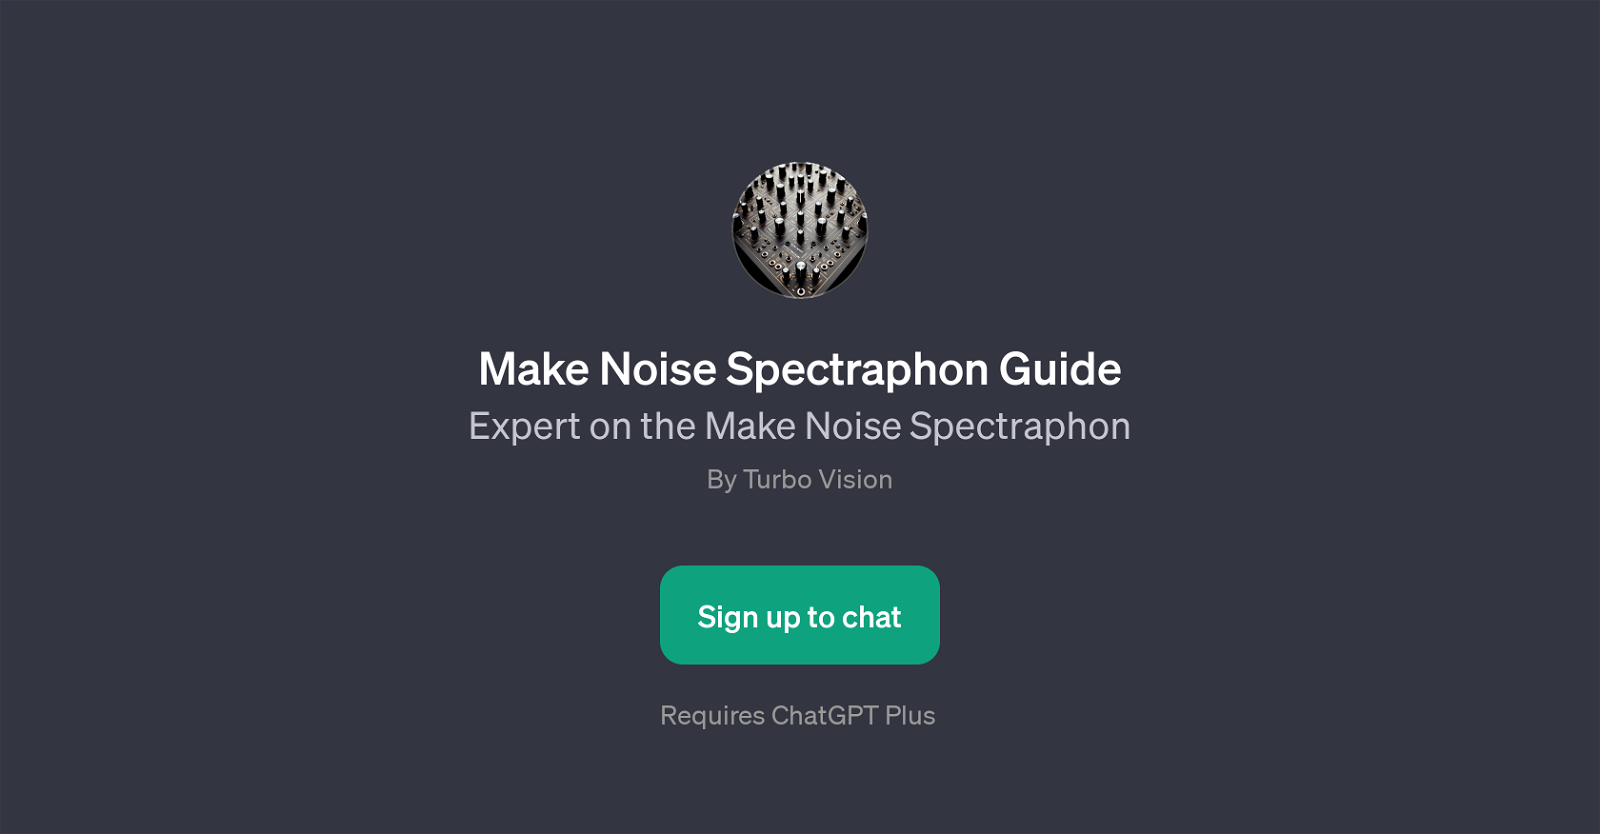 Make Noise Spectraphon Guide website